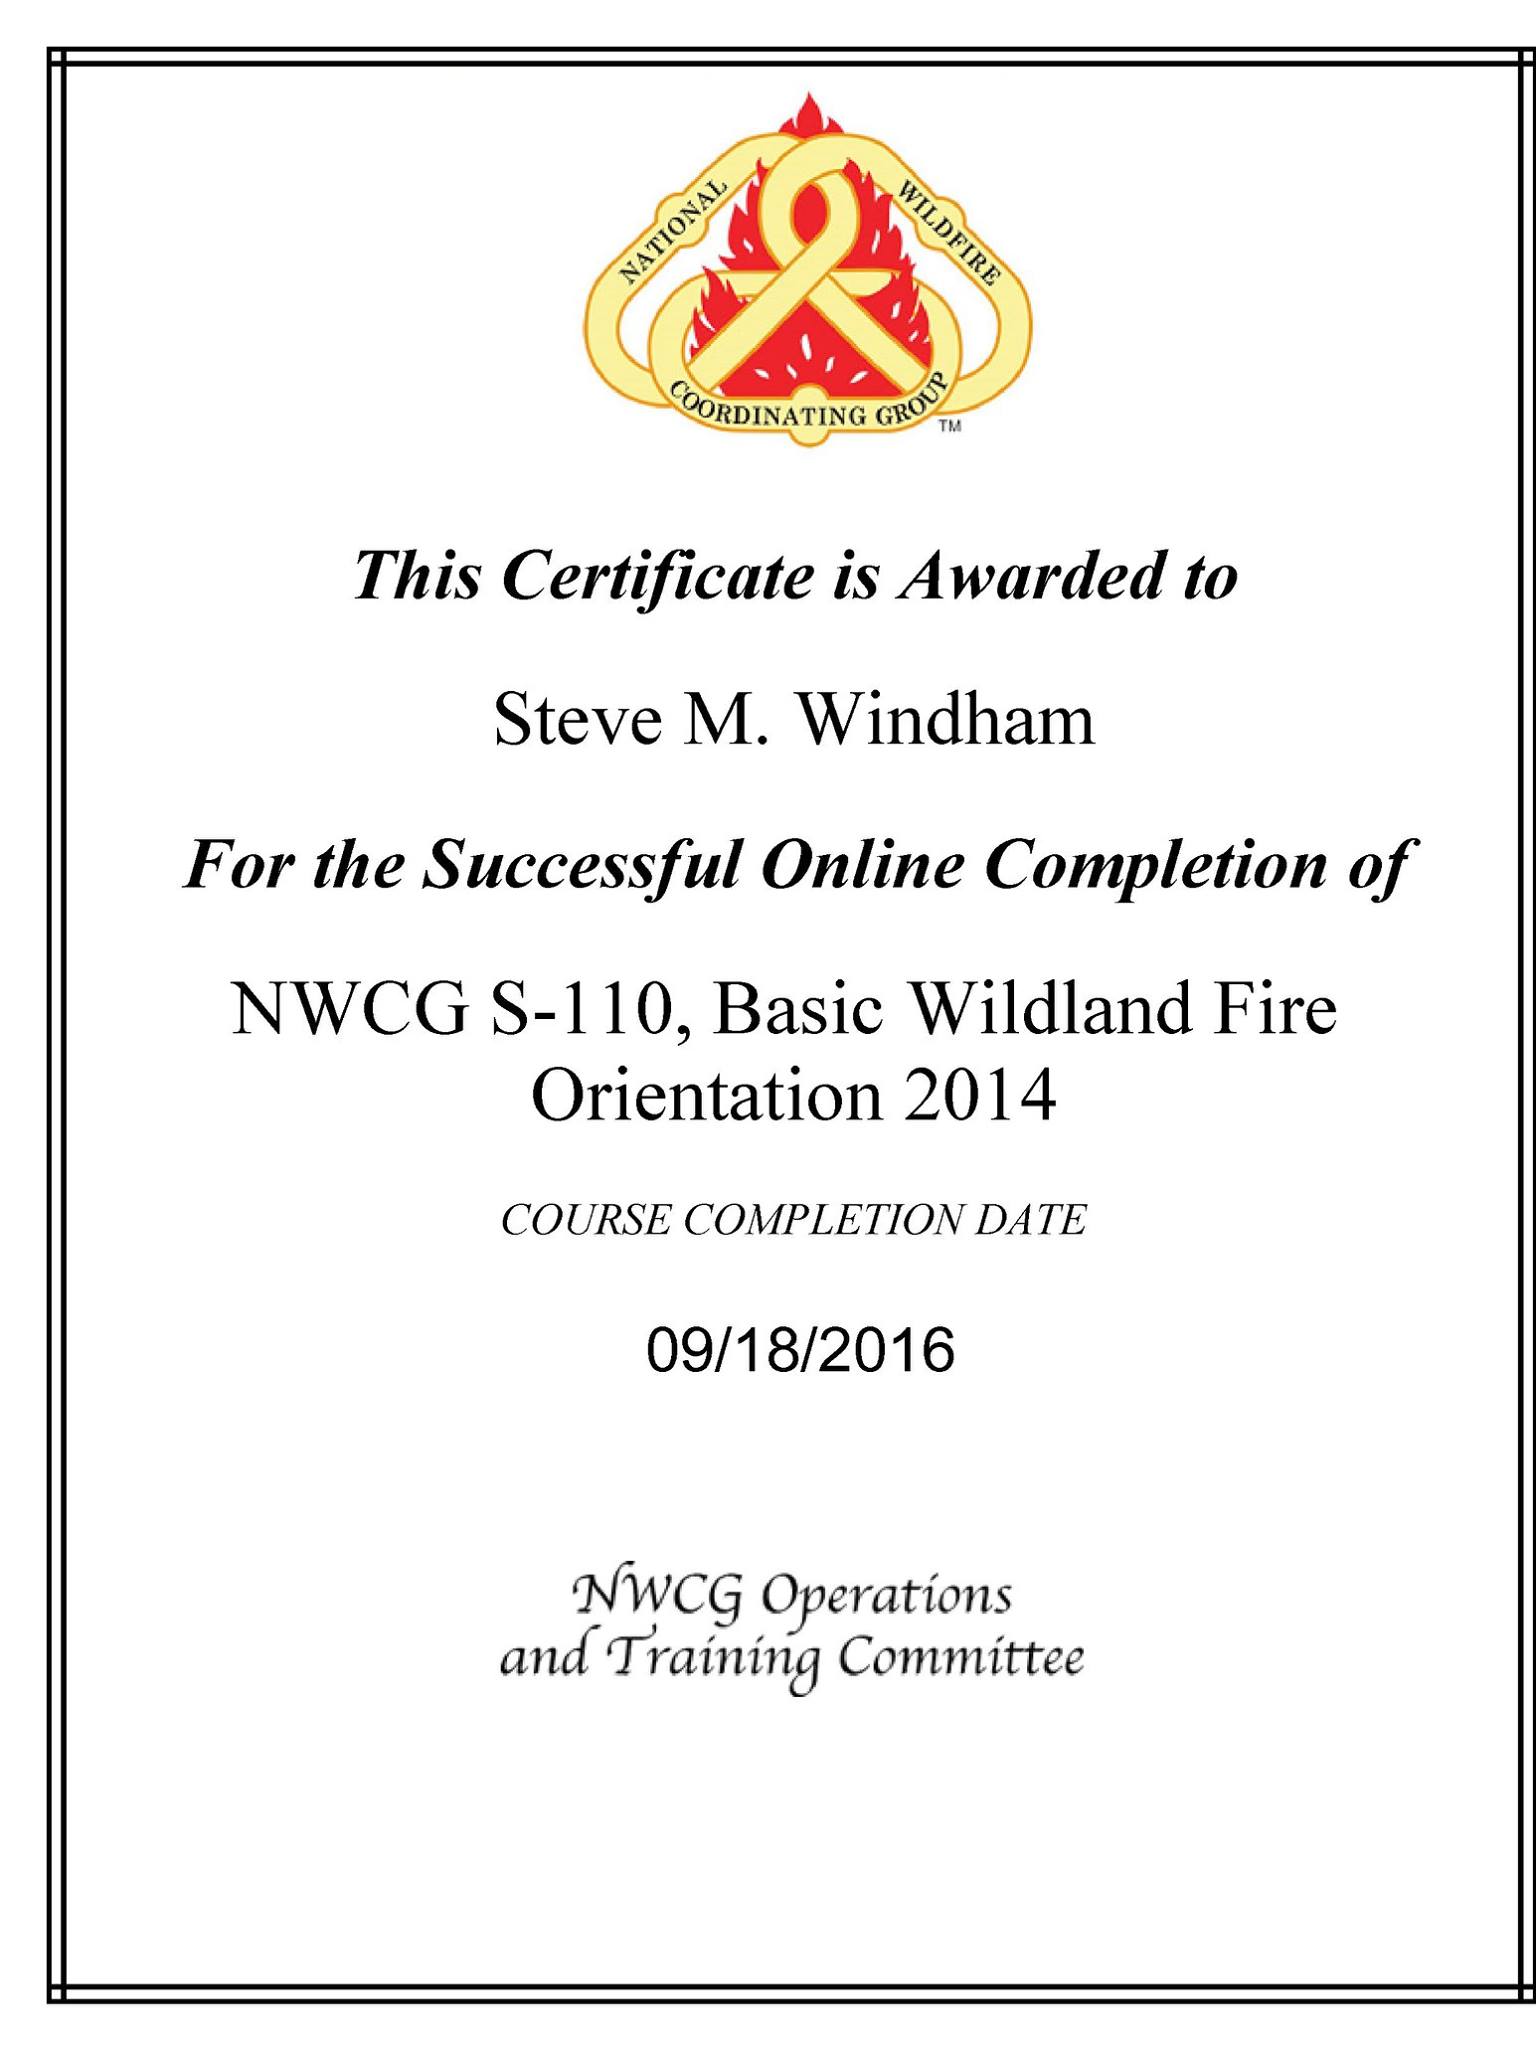 NWCG S-110 BASIC WILDLAND FIRE ORIENTATION 2015 09.18.2016